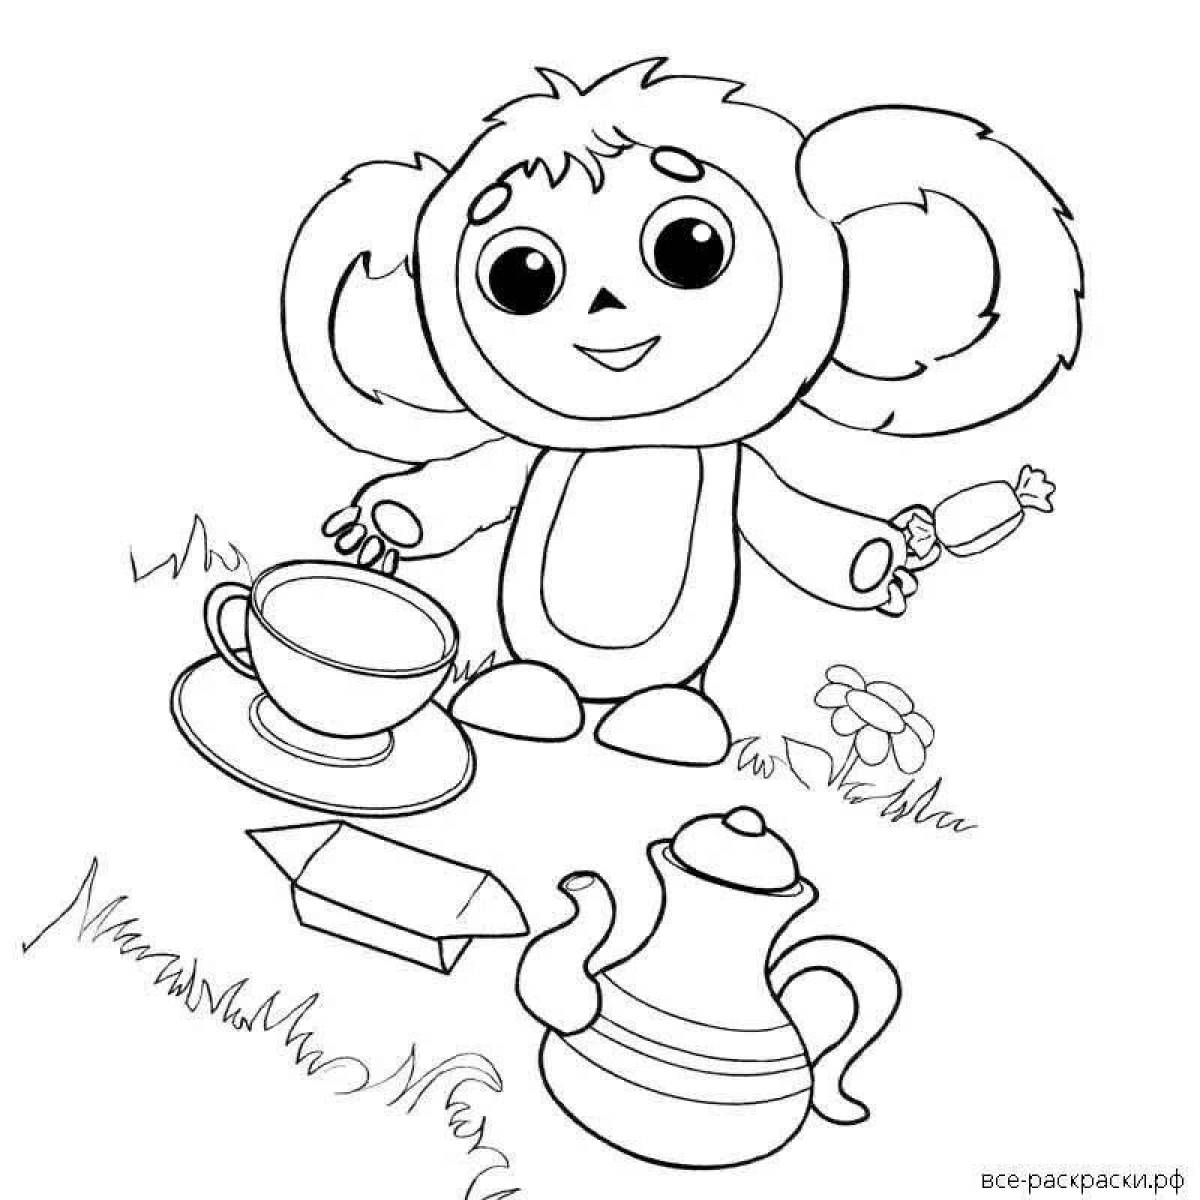 Inviting cheburashka coloring book for kids